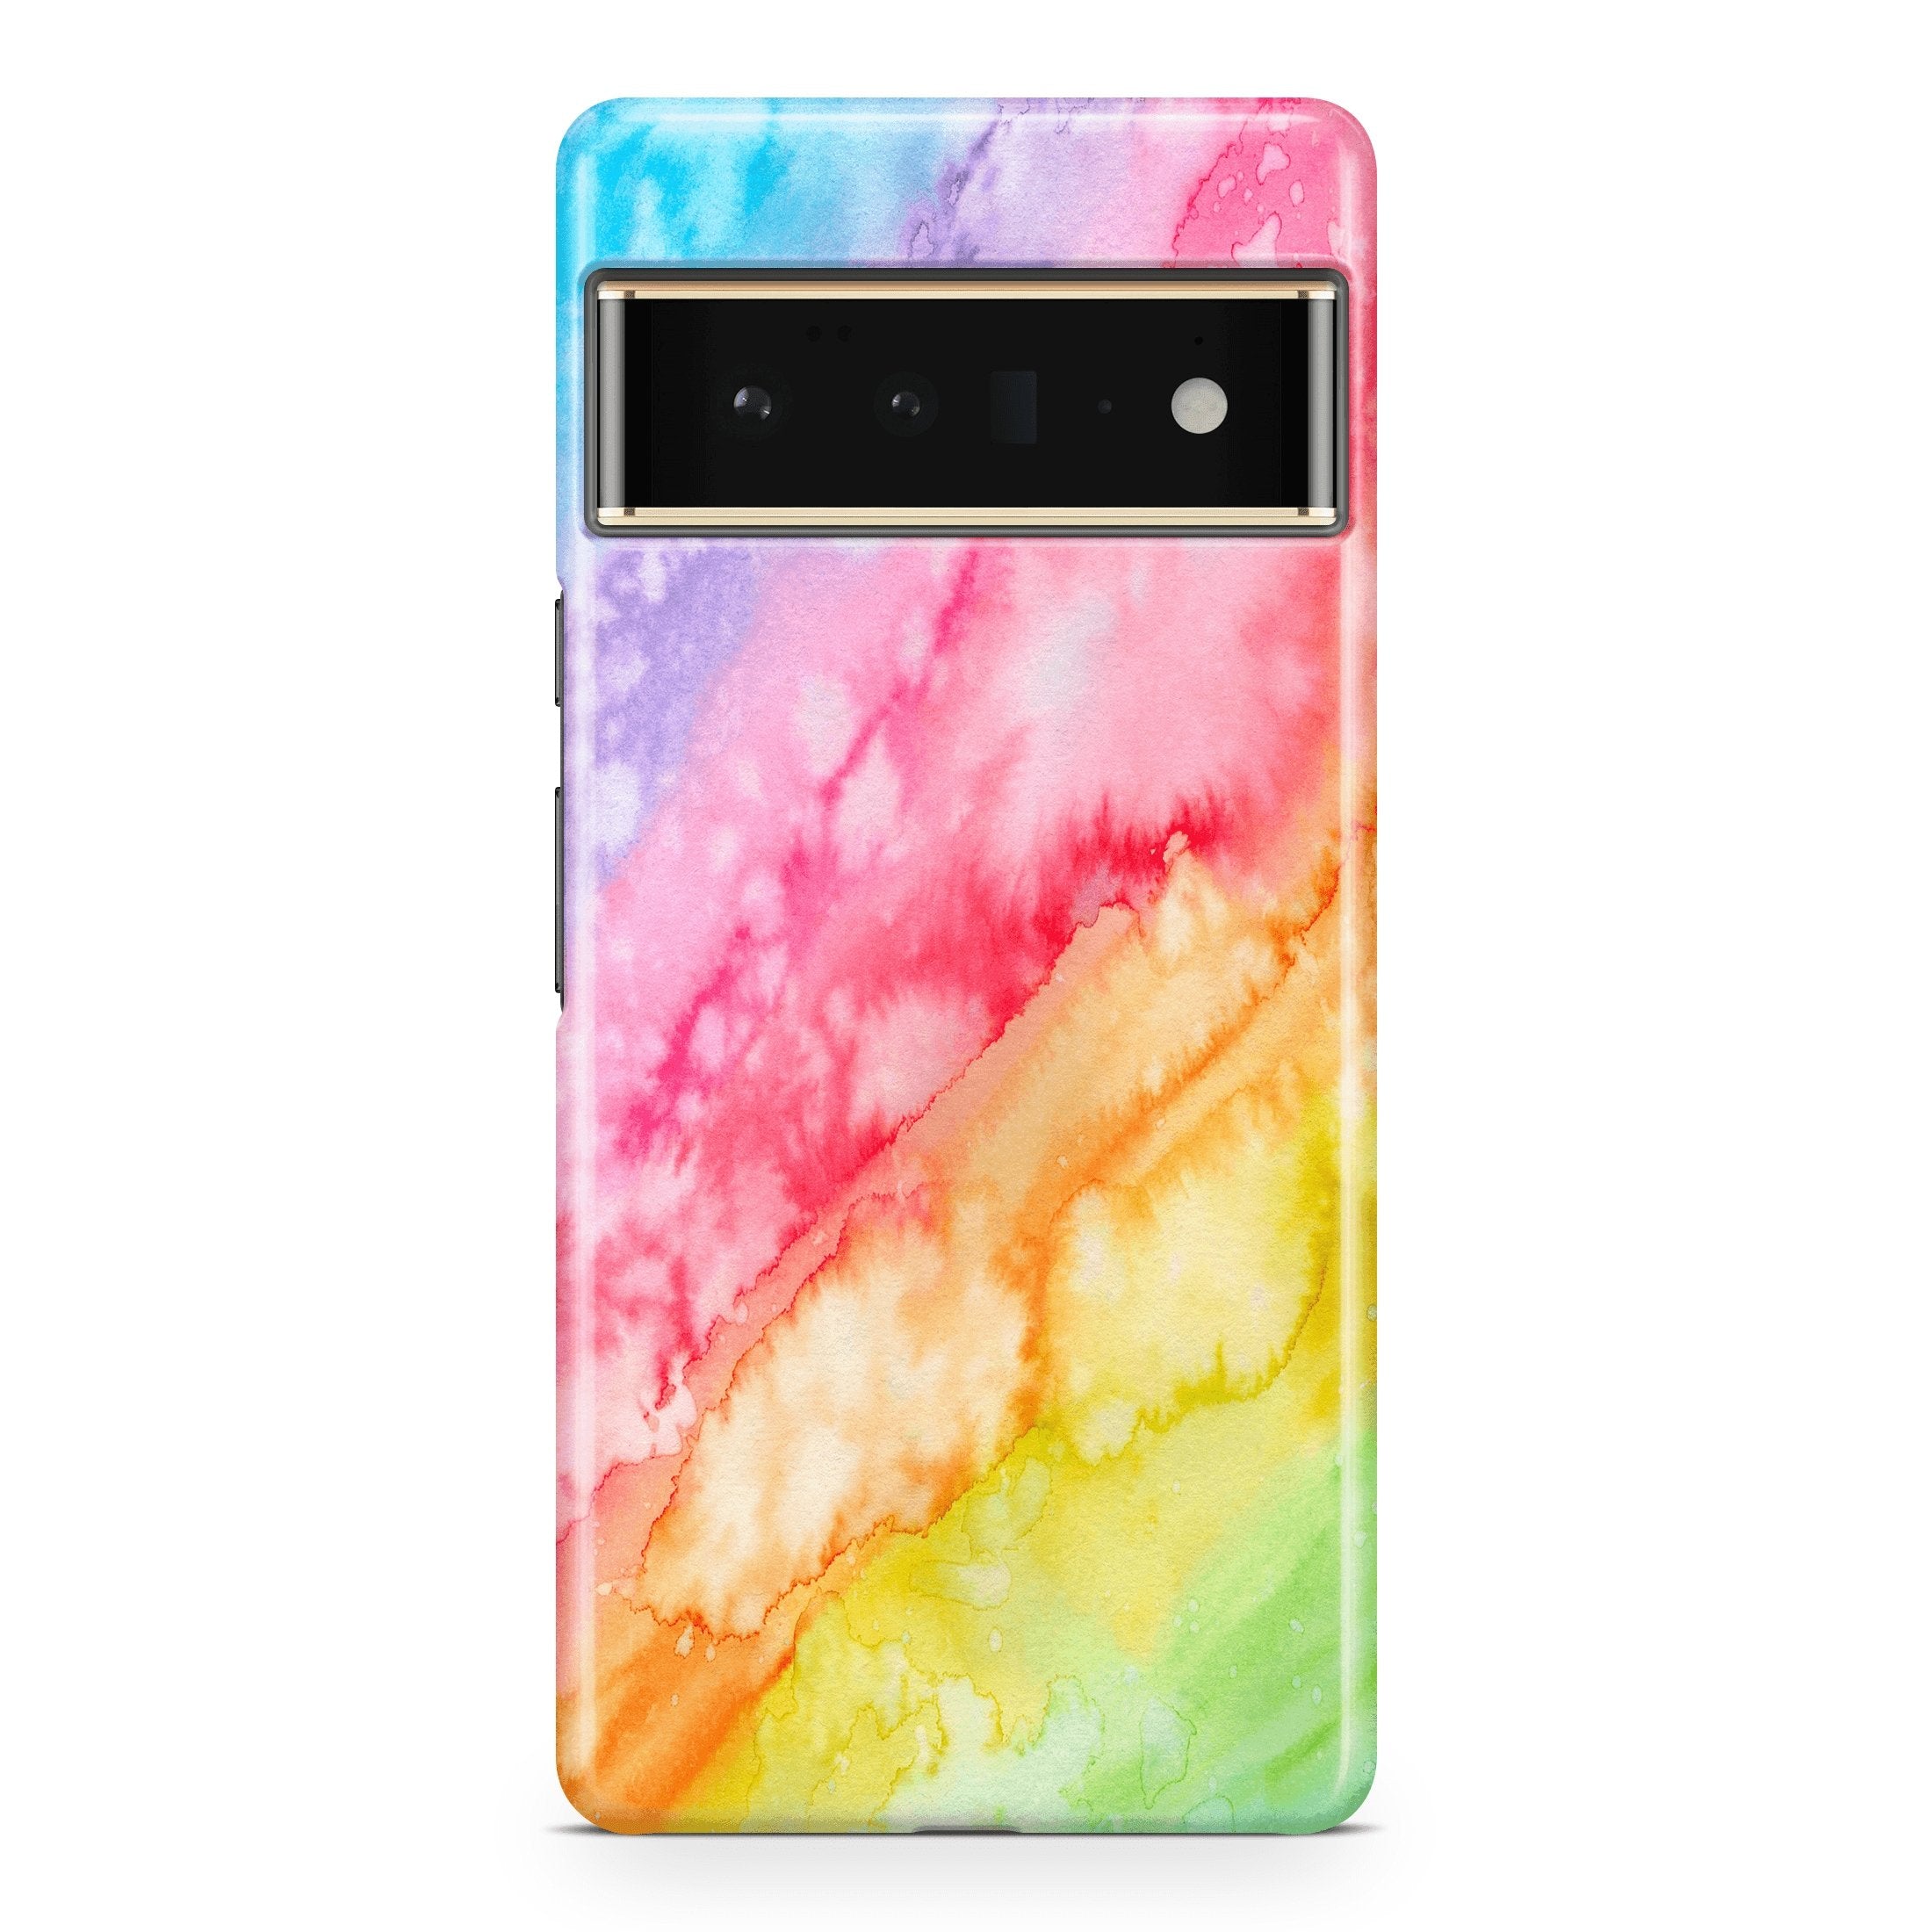 Rainbow Bridge - Google phone case designs by CaseSwagger